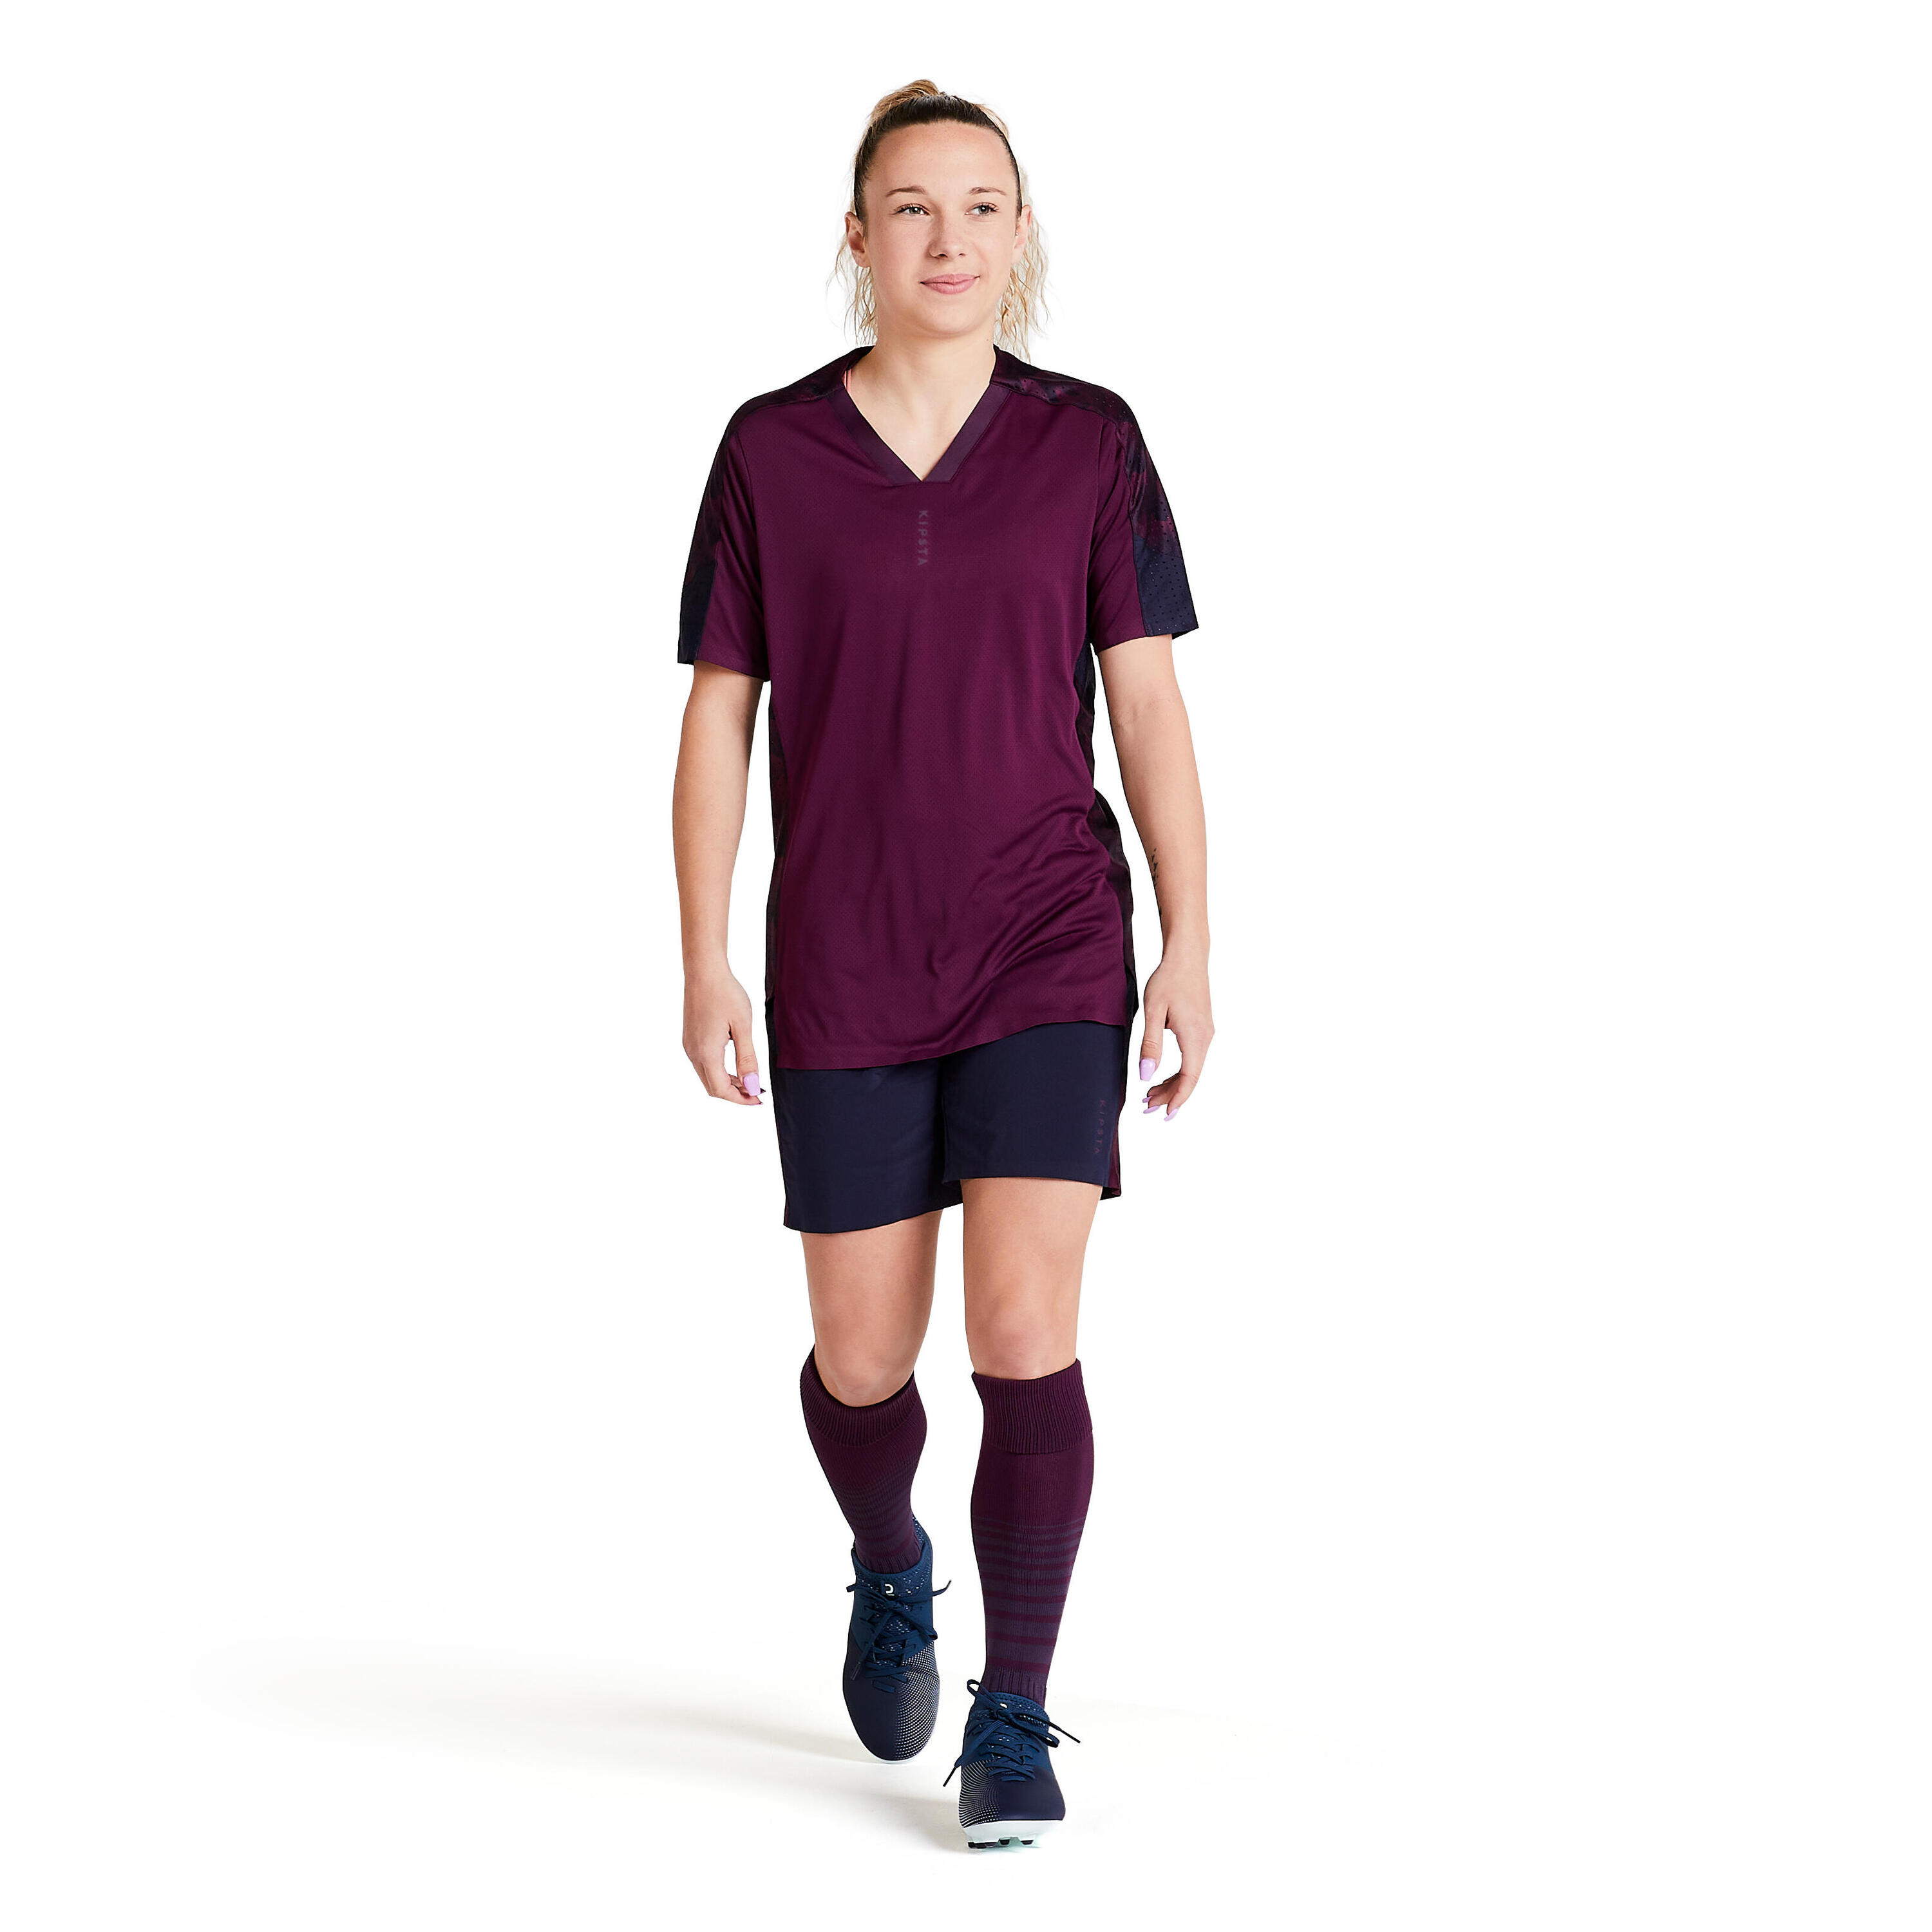 Women's Football Shorts F900 - Blue/Black 7/25